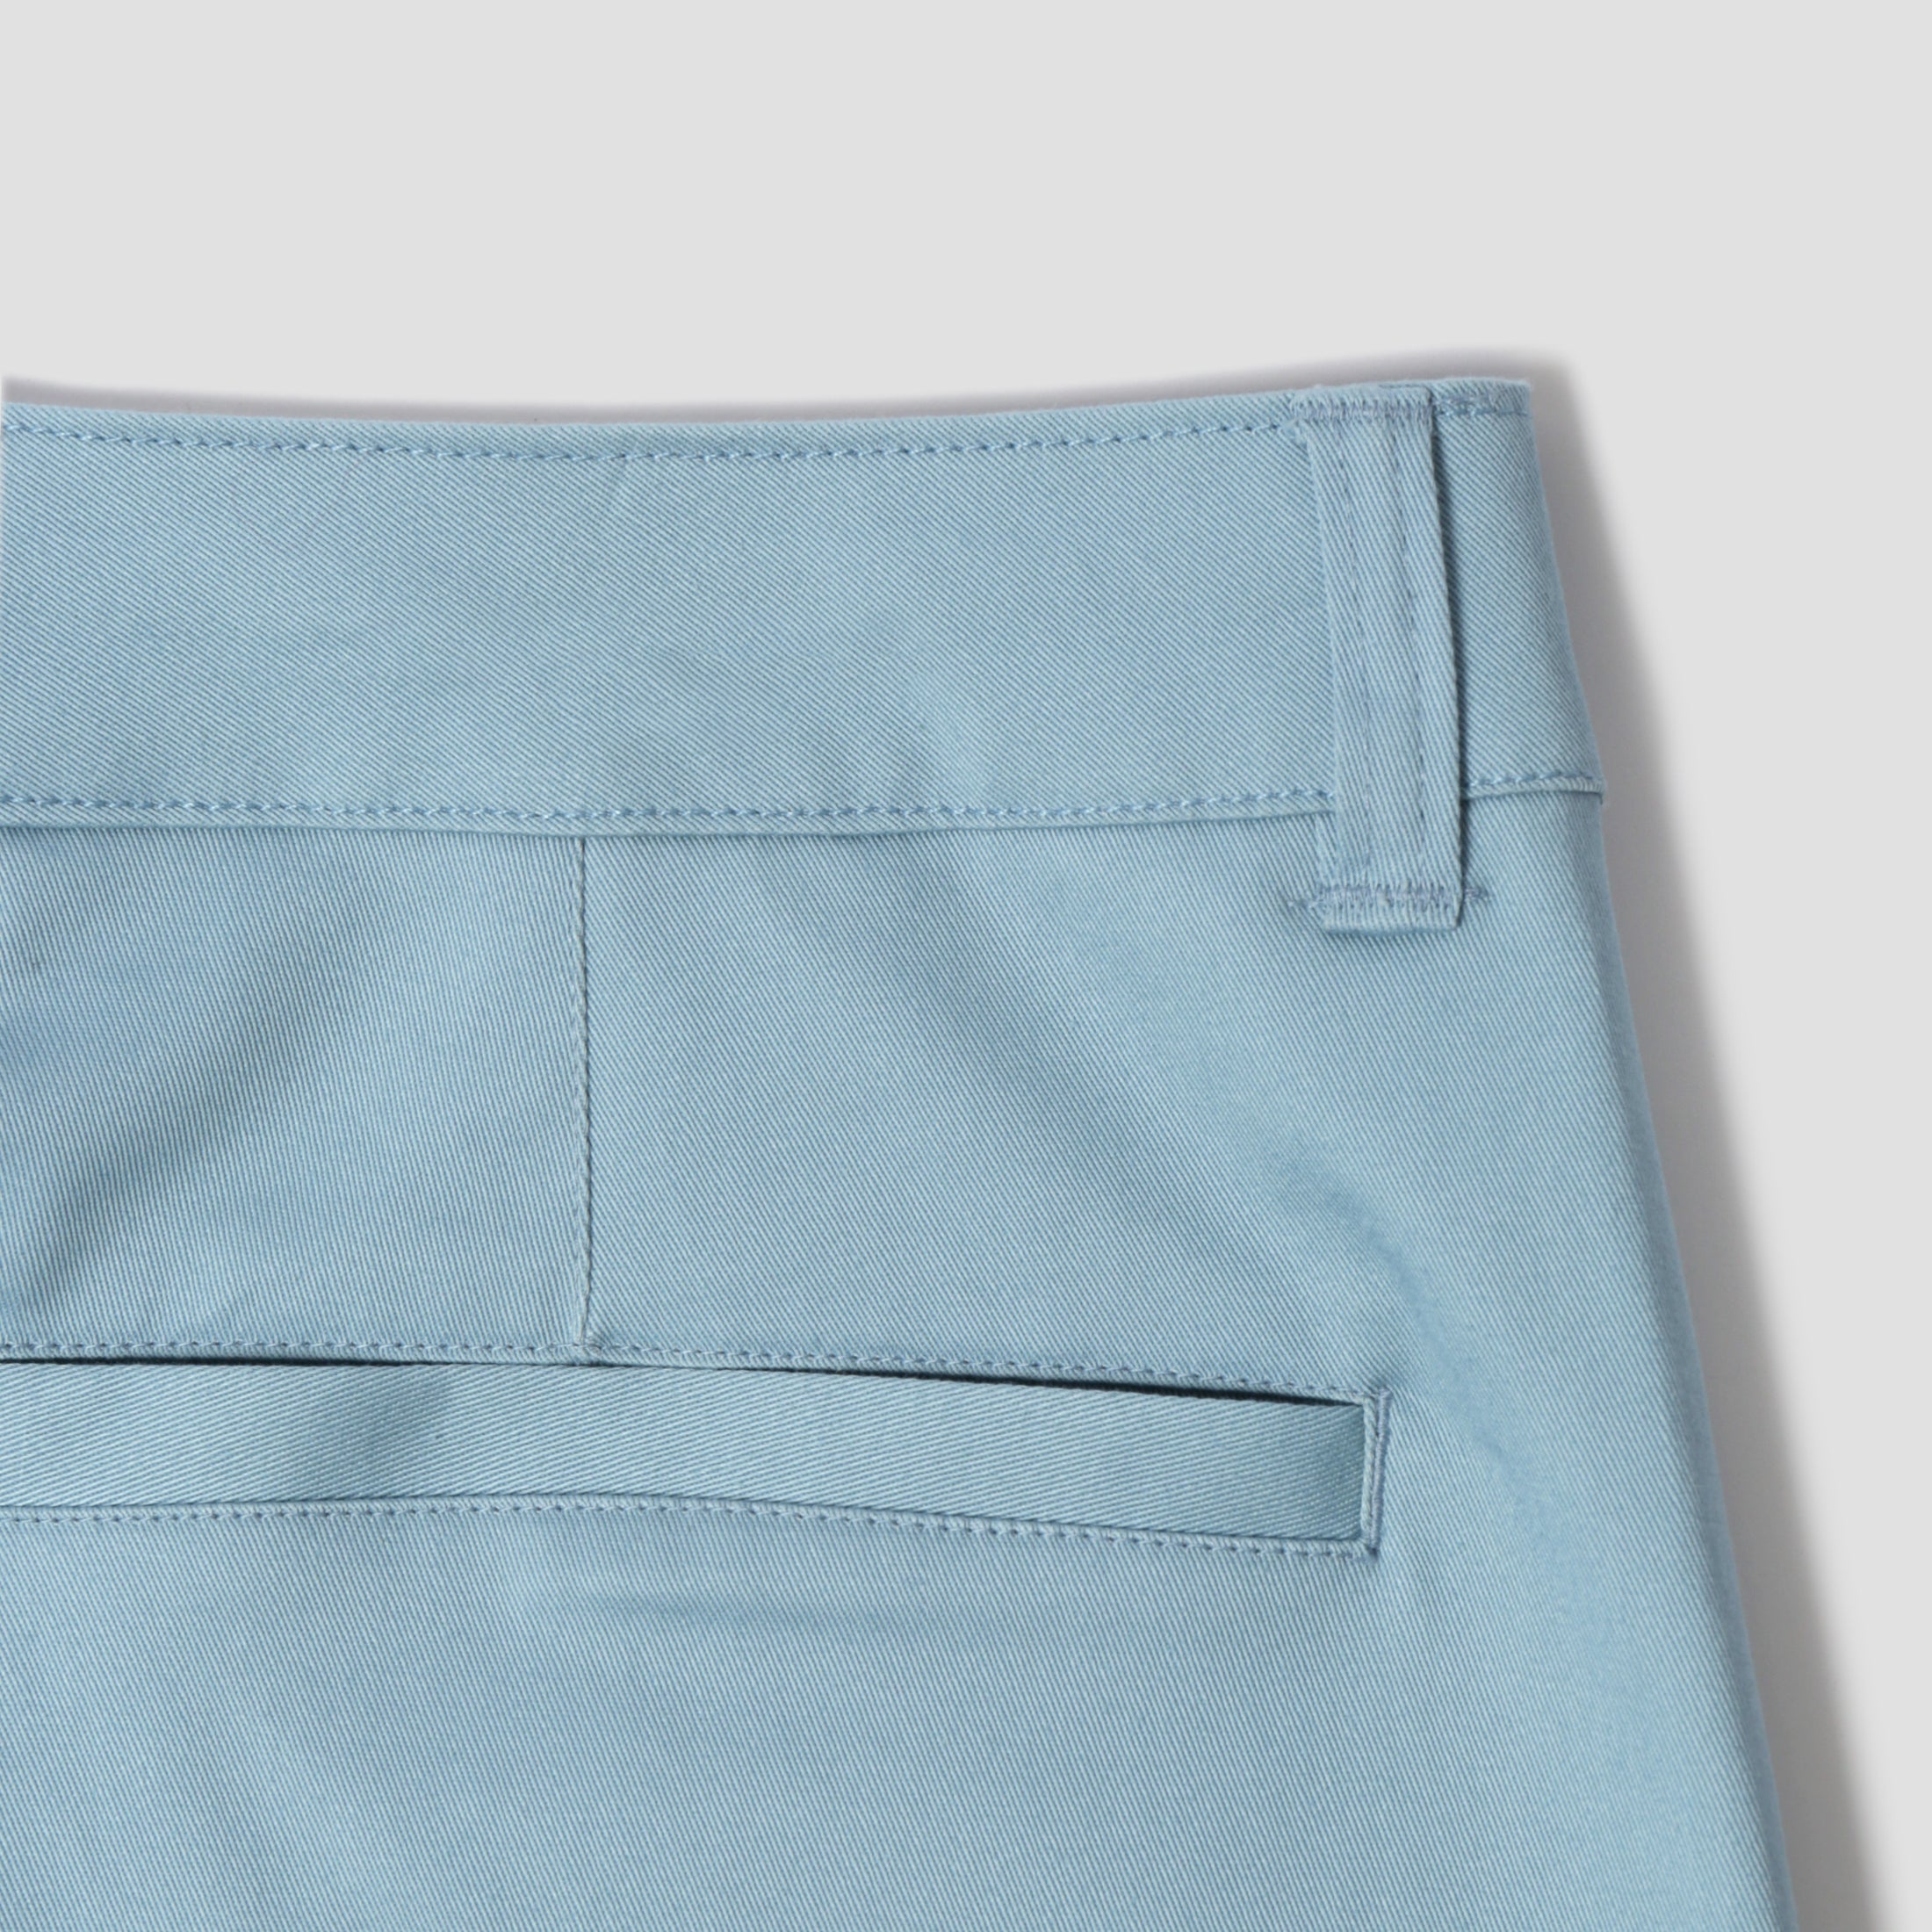 Nike Unlined Cotton Chino Pants Worn Blue / White